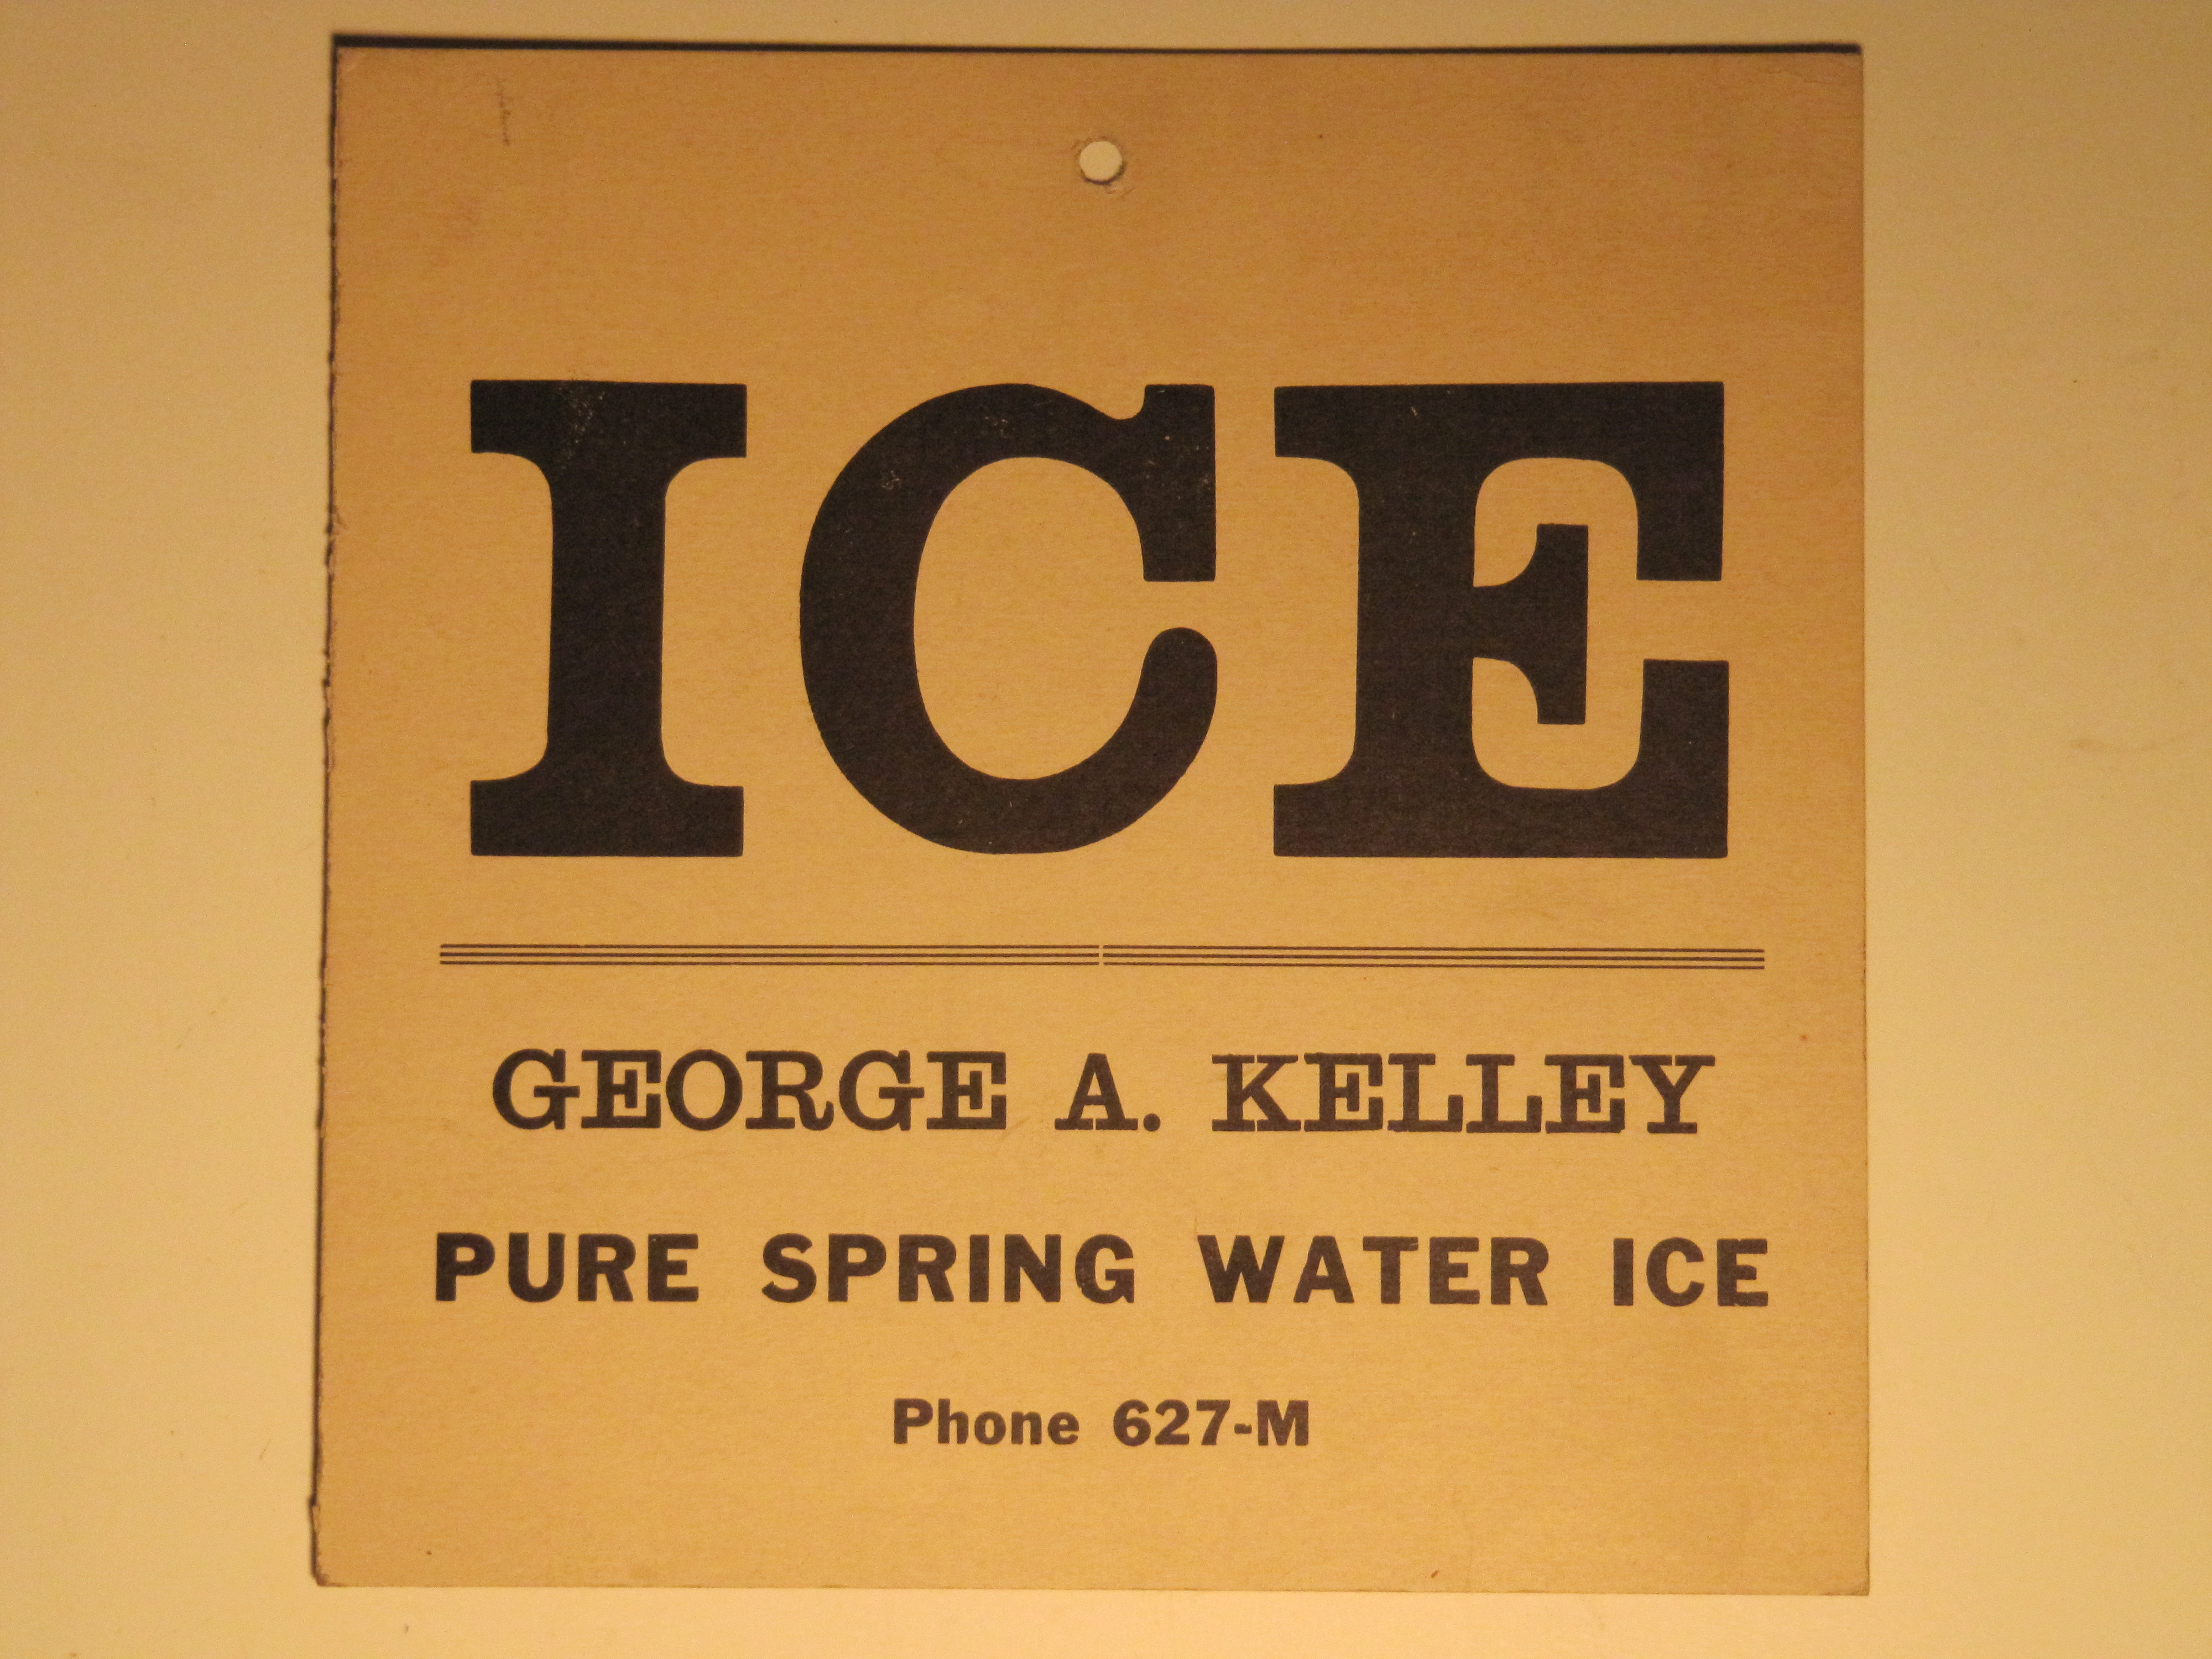 George A. Kelley